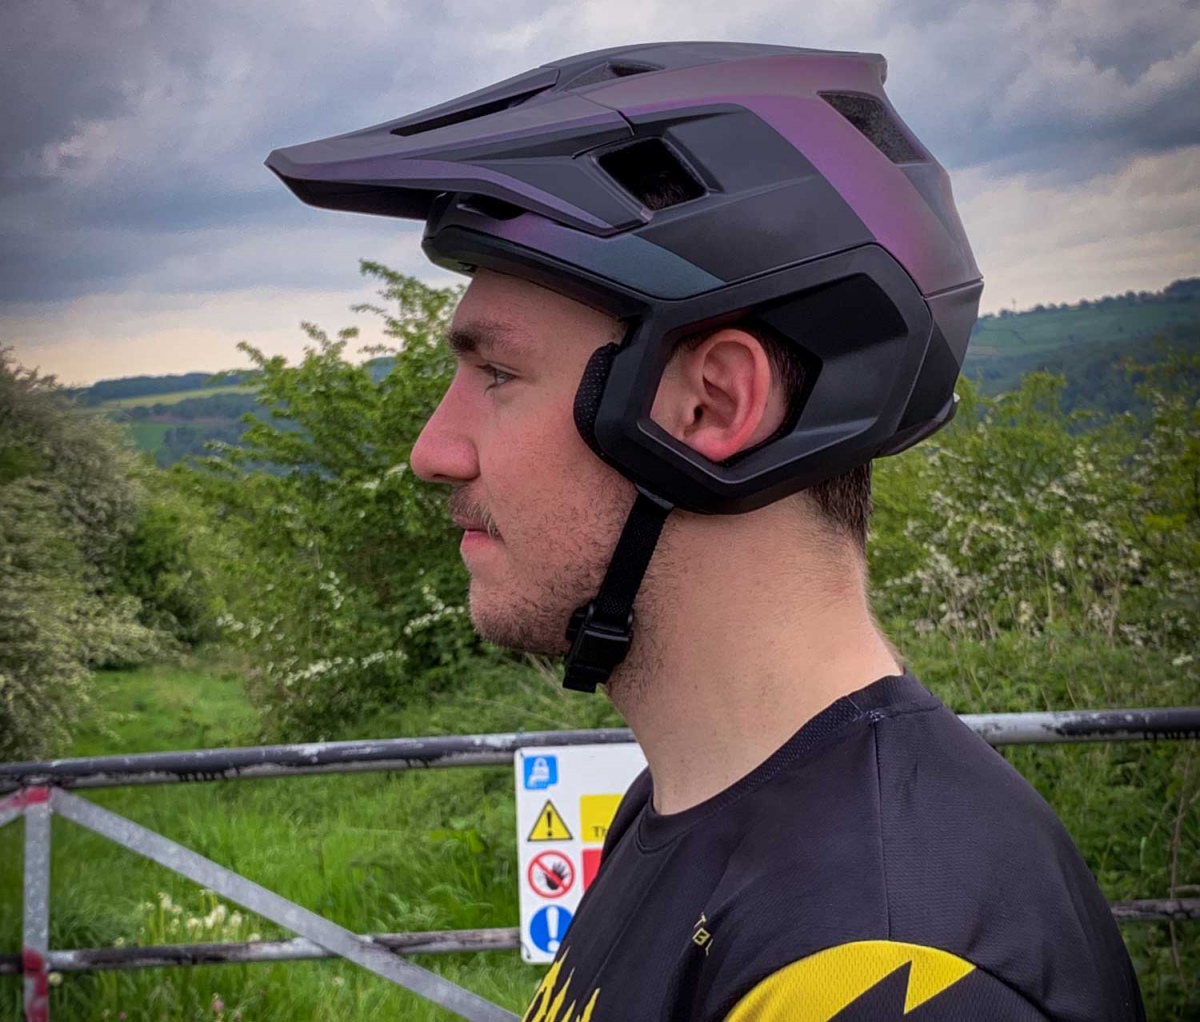 Fox Dropframe MTB Helmet Review | The Loam Wolf